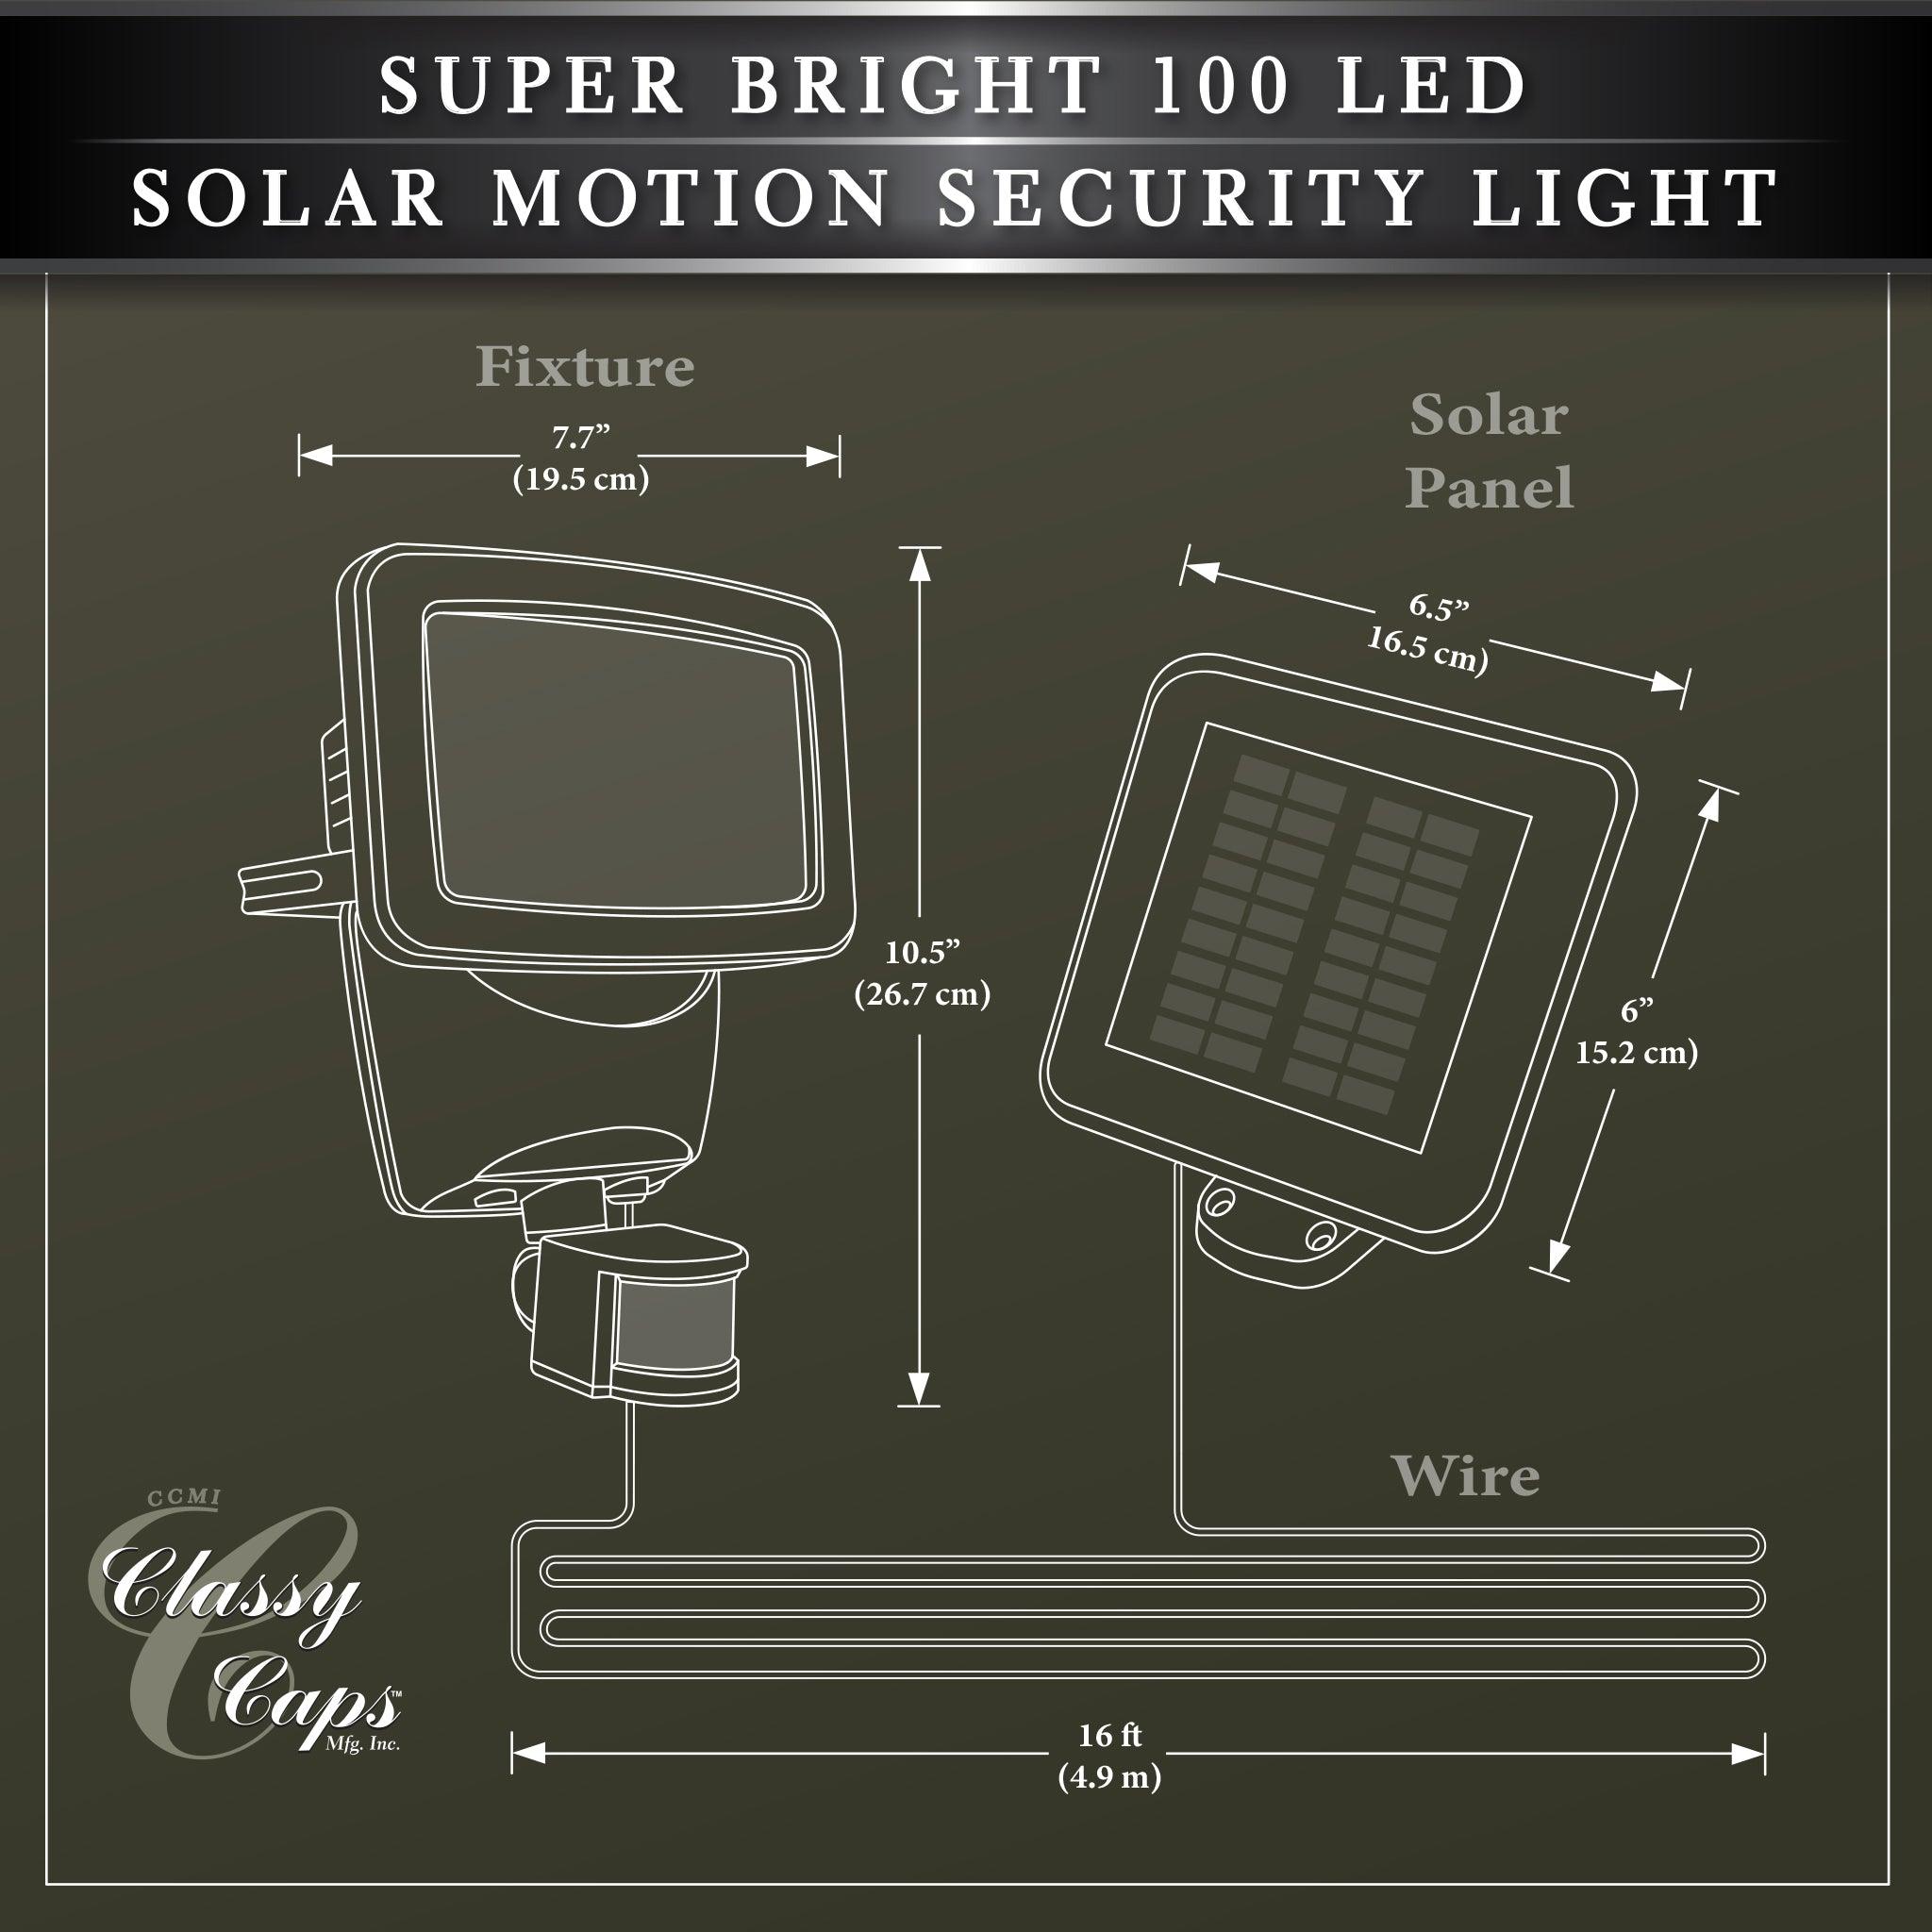 Super Bright 100 LED Solar Motion Security Light - Classy Caps Mfg. Inc.